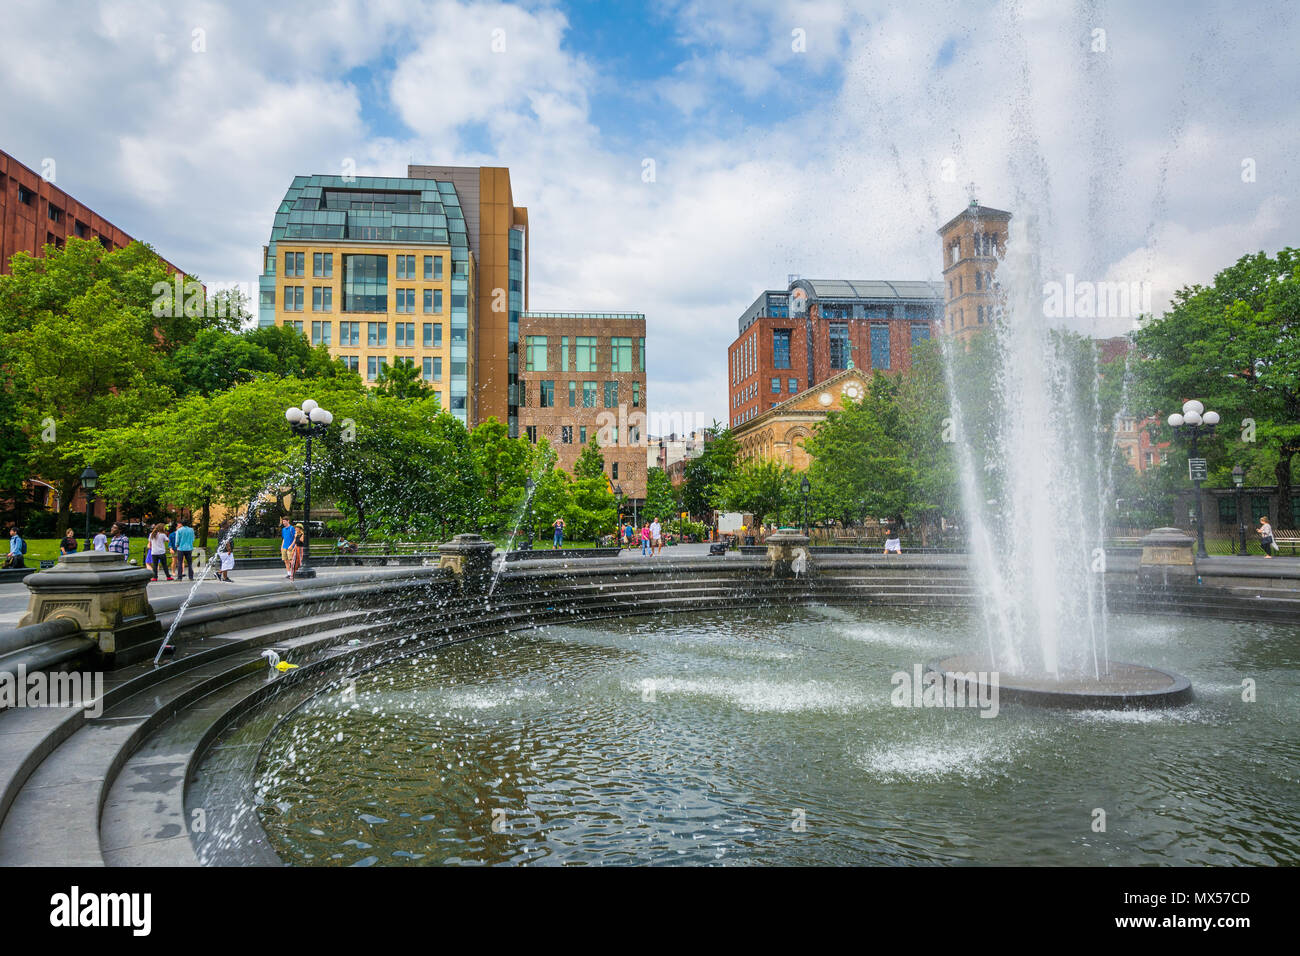 The fountain at Washington Square Park in Greenwich Village, Manhattan, New York City. Stock Photo